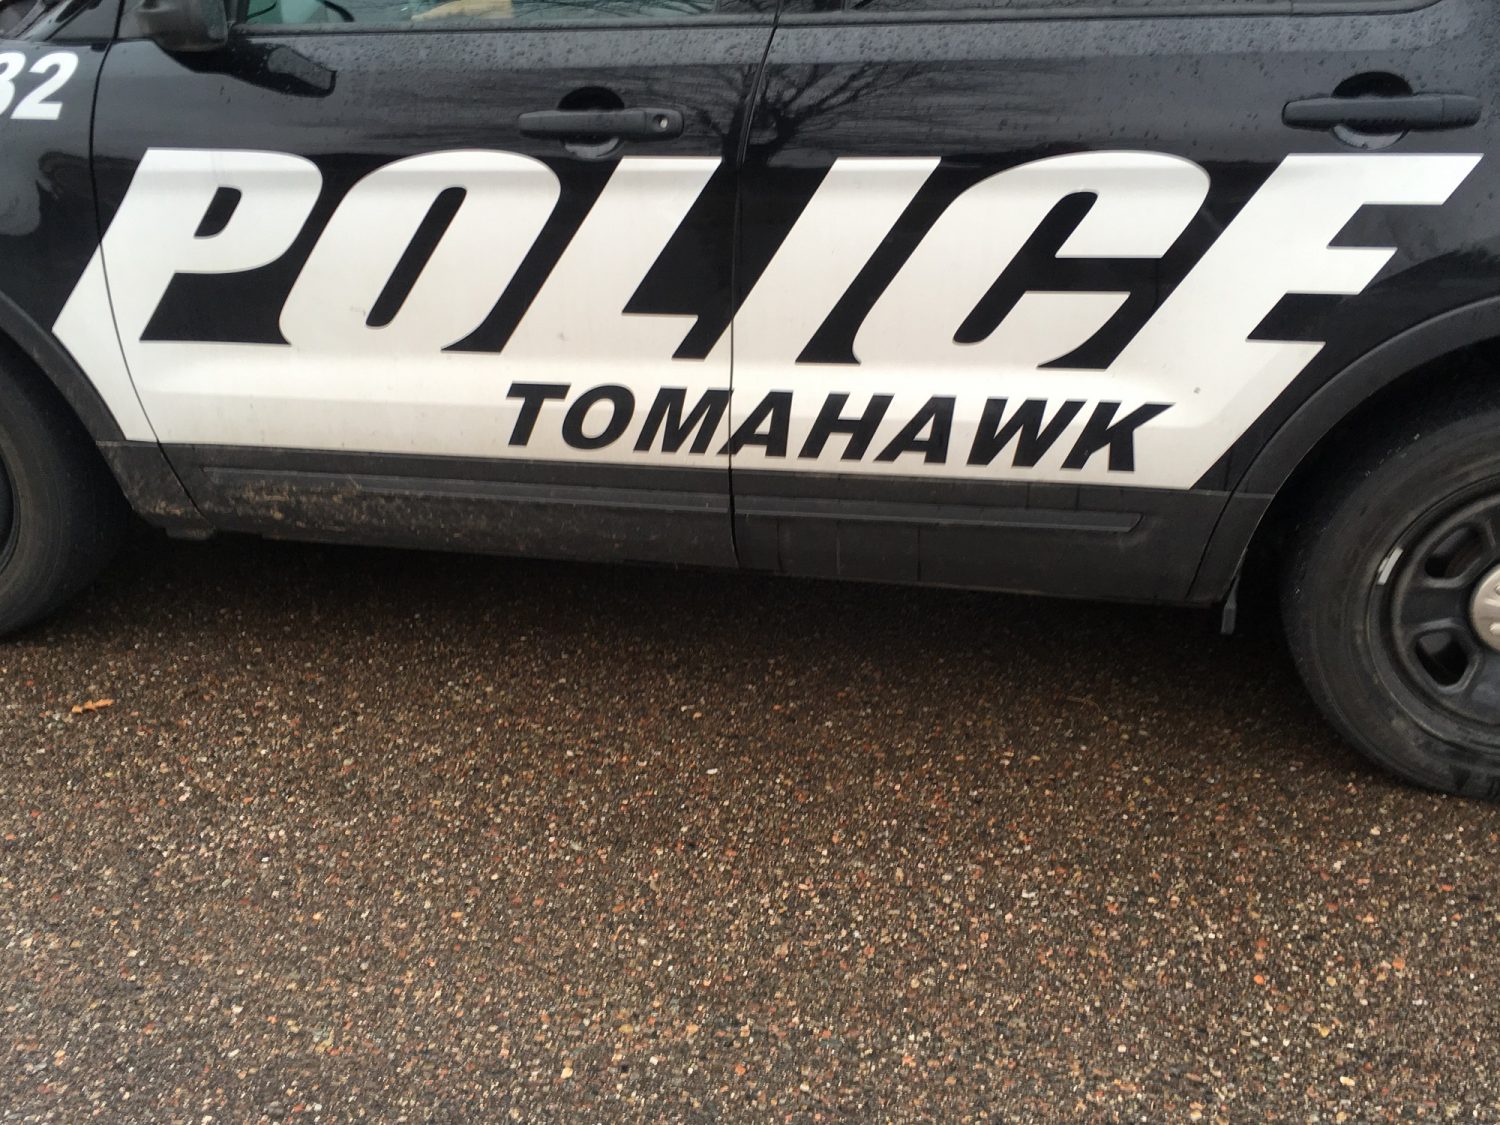 Trial date set in Tomahawk homicide